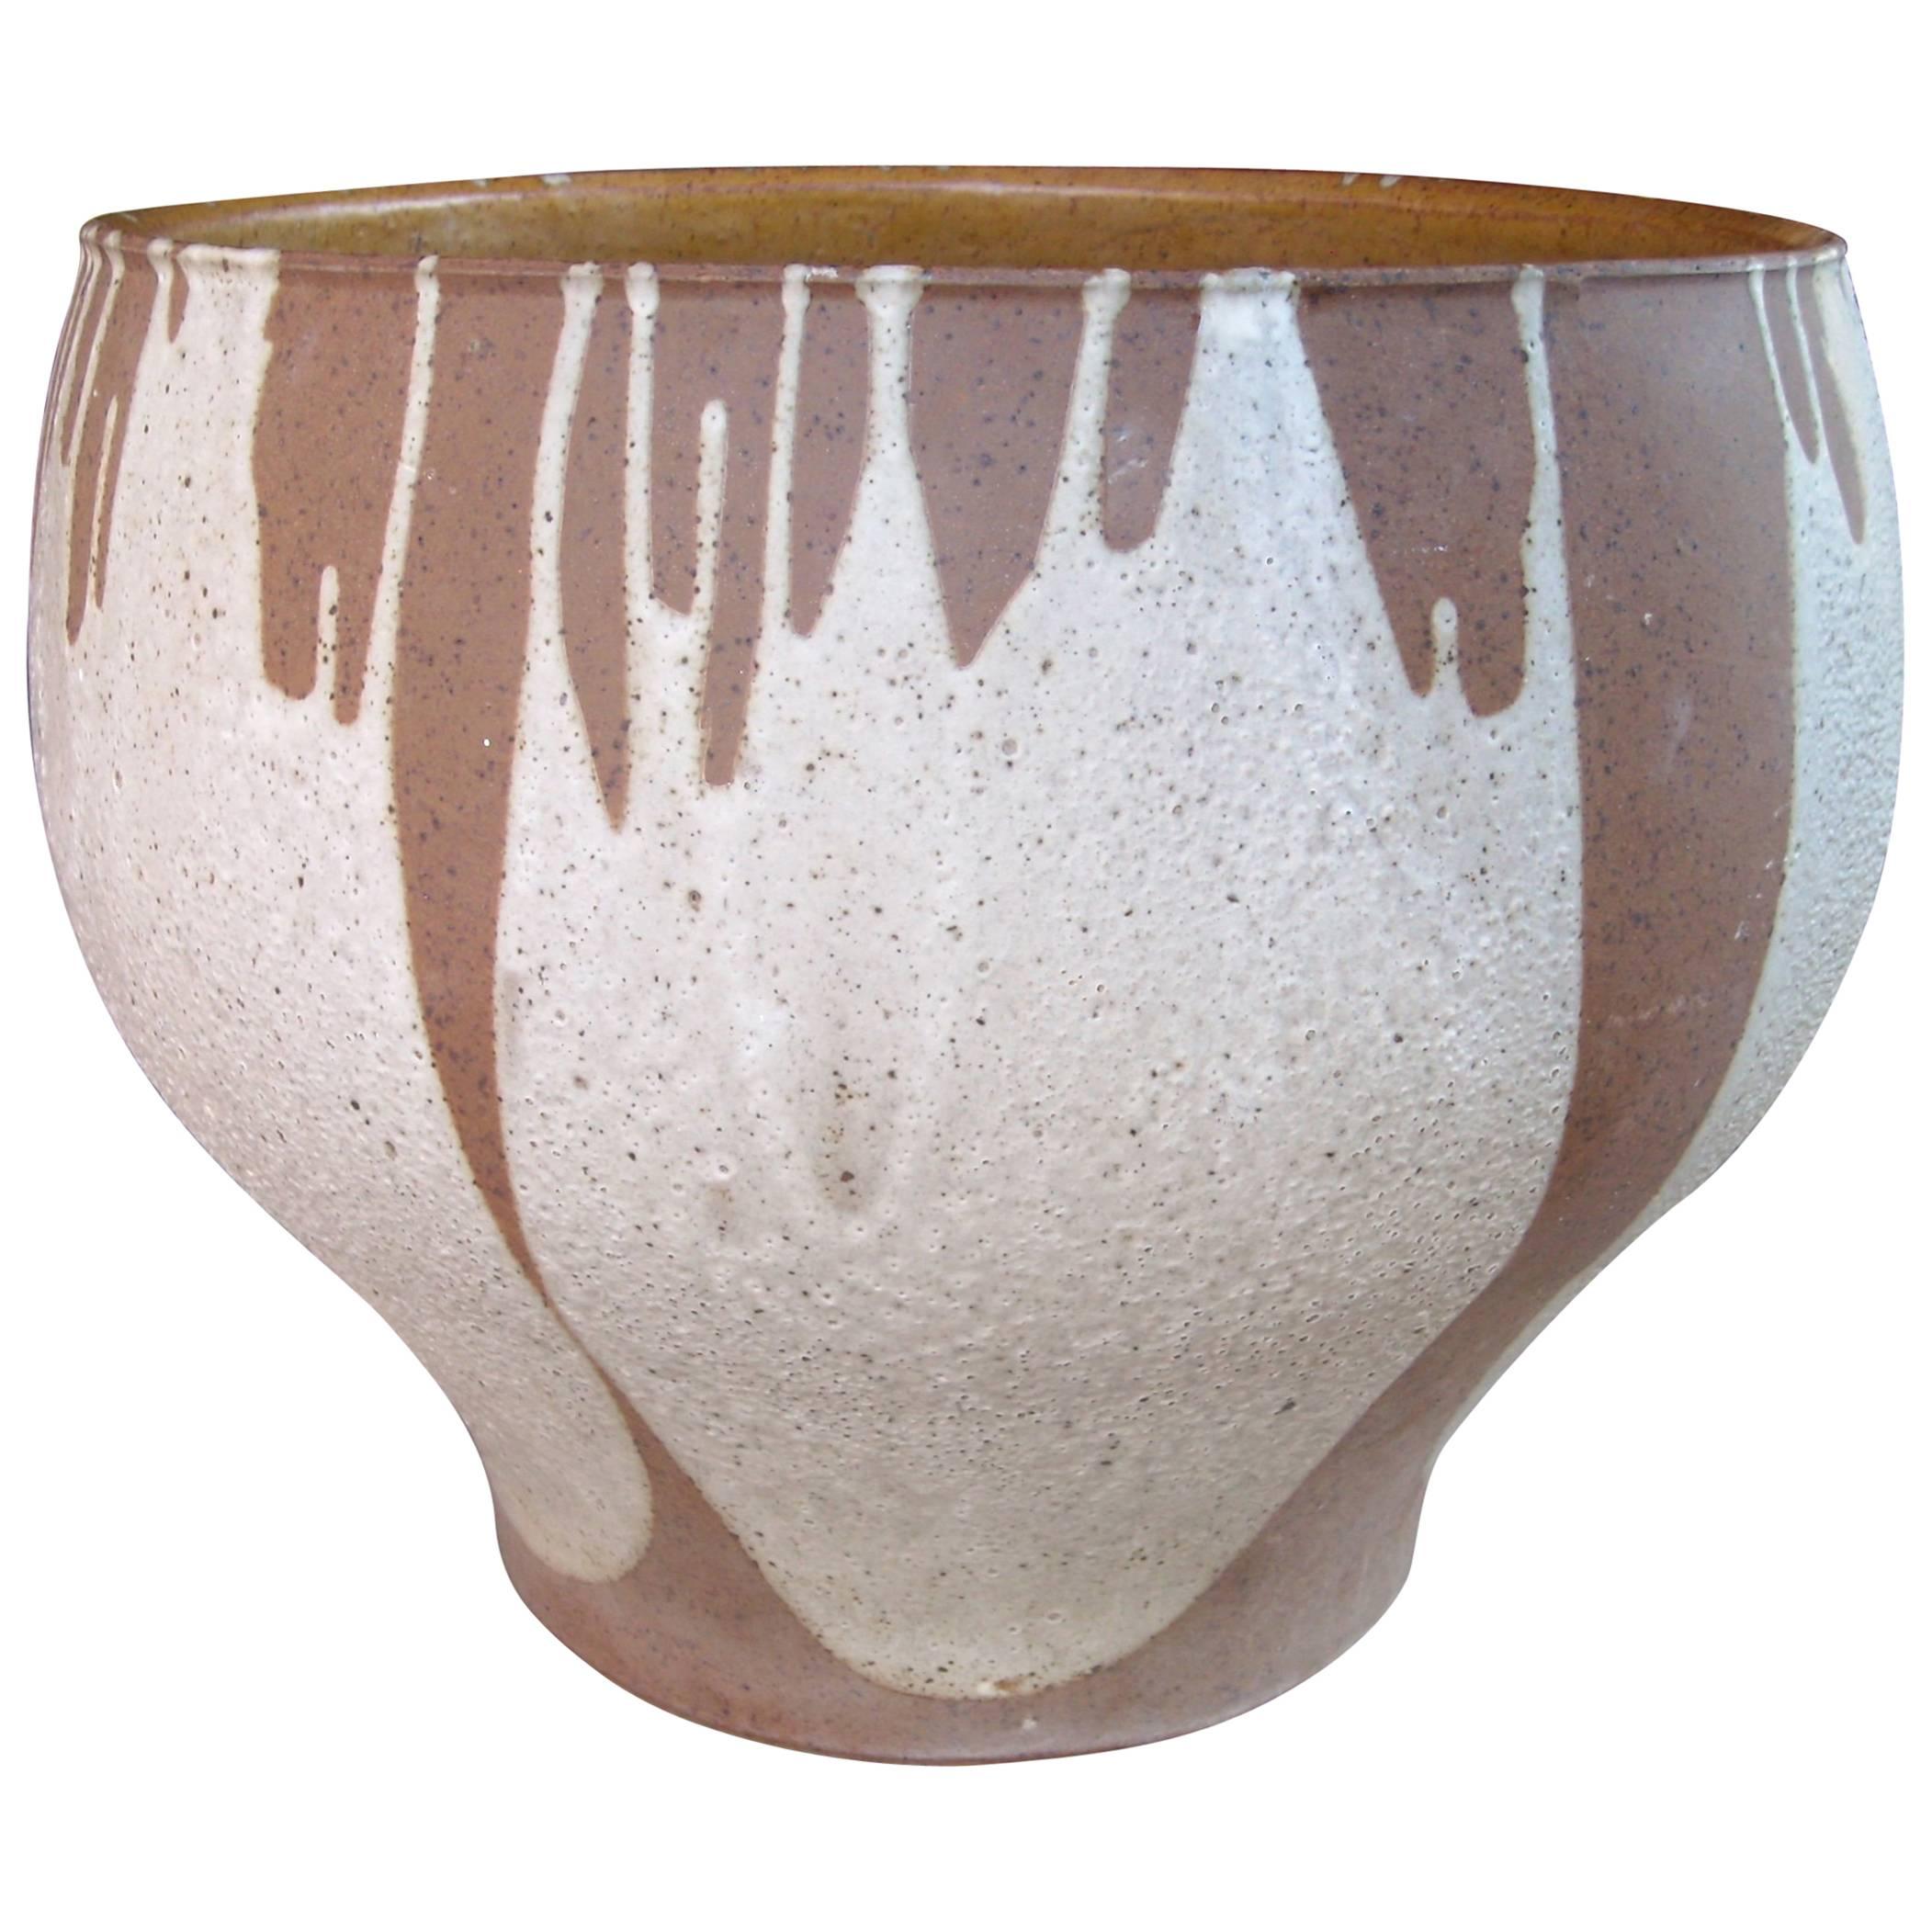 David Cressey Large Pottery, Ceramic Pot or Planter